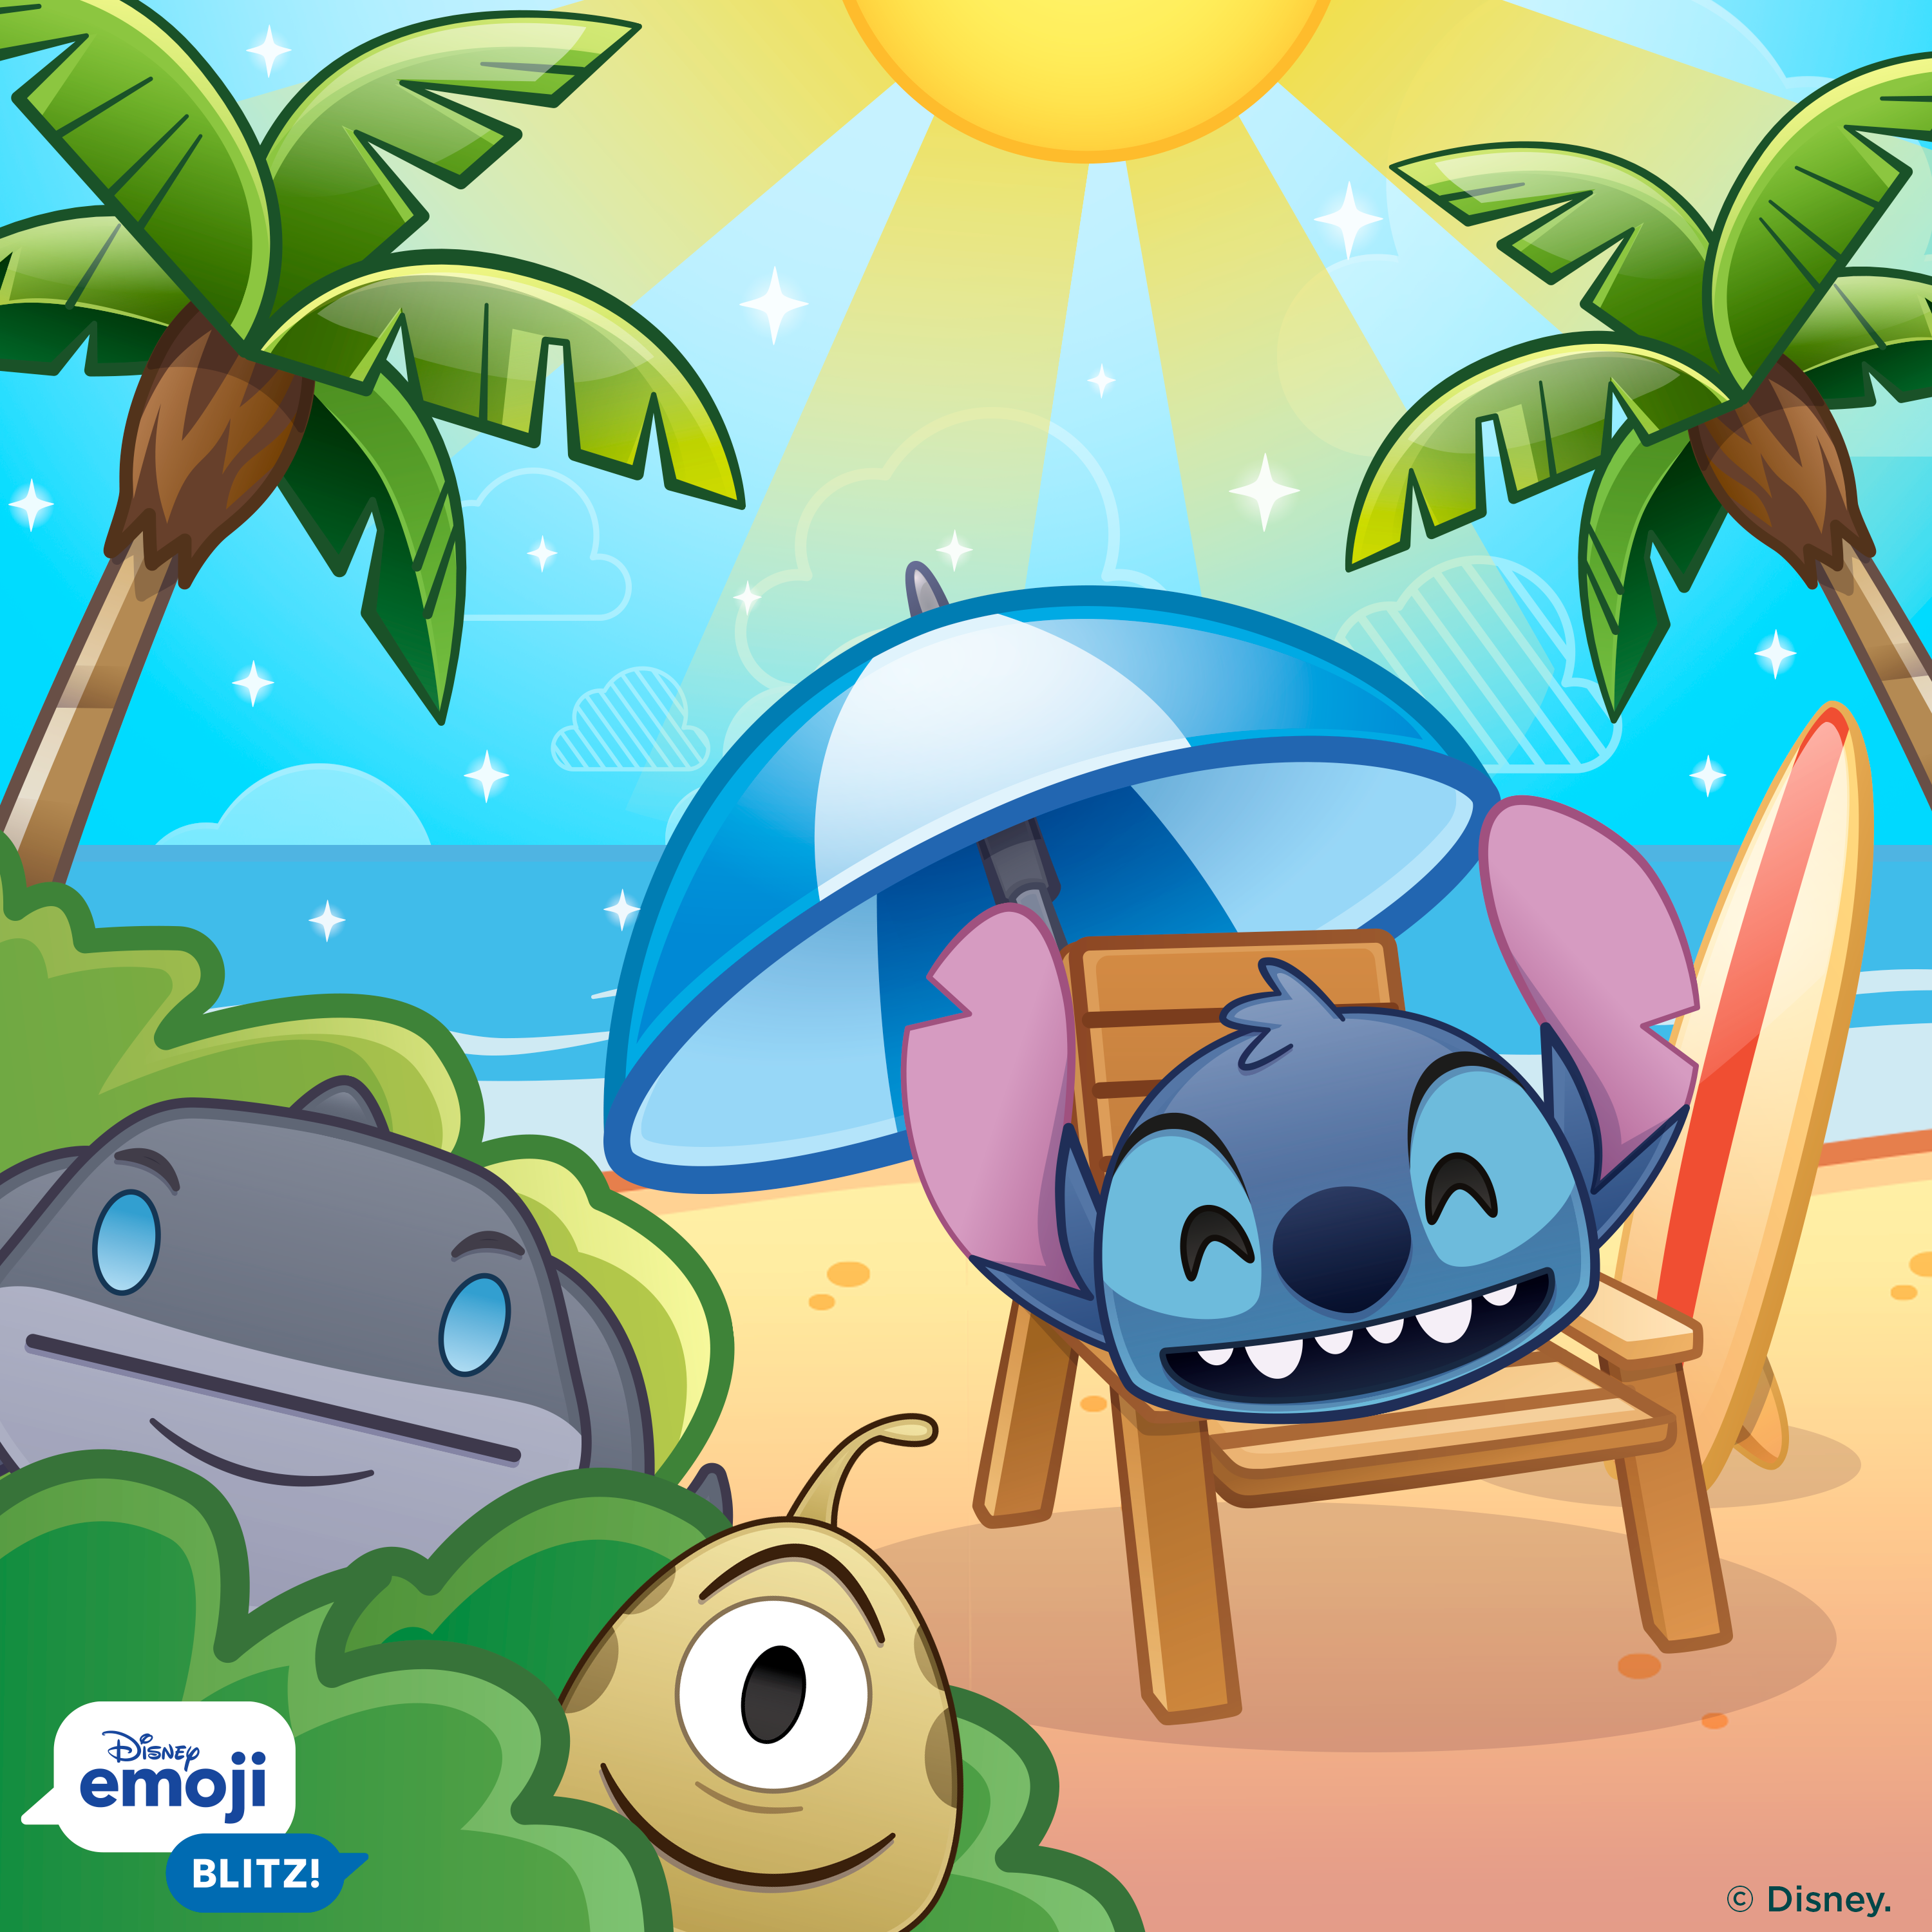 In an image from Disney Emoji Blitz, the Stitch, Pleakley, and Gantu emojis are seen on a beach,